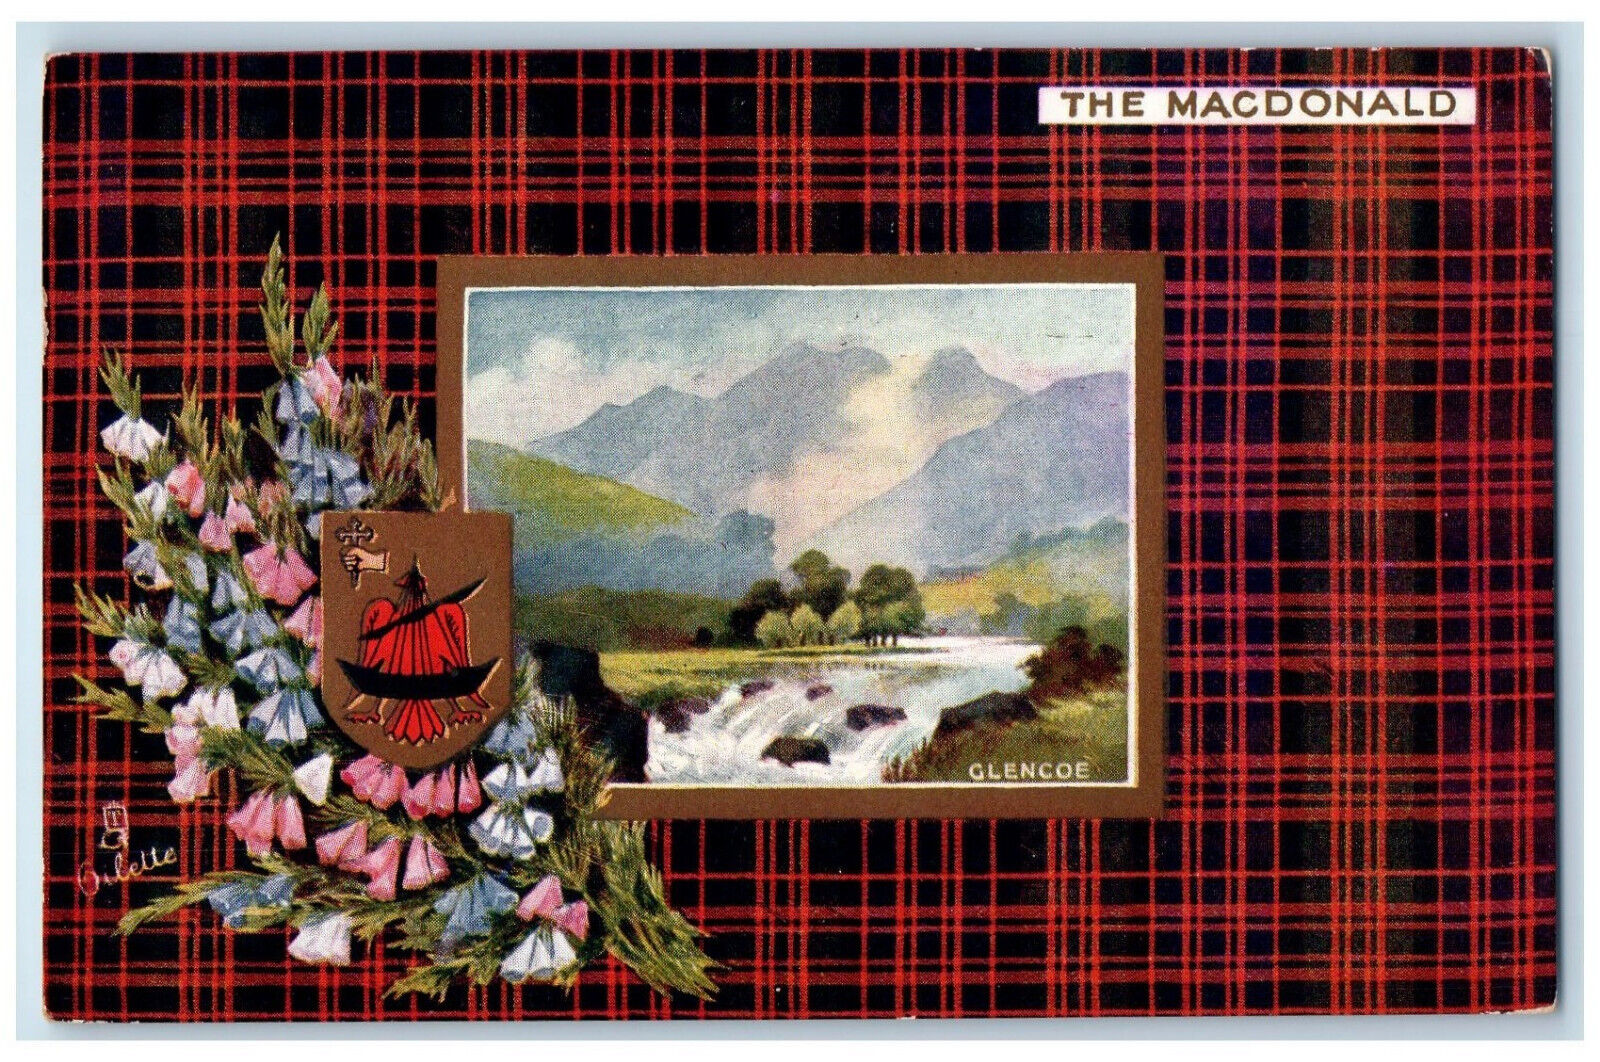 1907 The Macdonald Glencoe Scottish Clans Oilette Tuck Art Posted Postcard